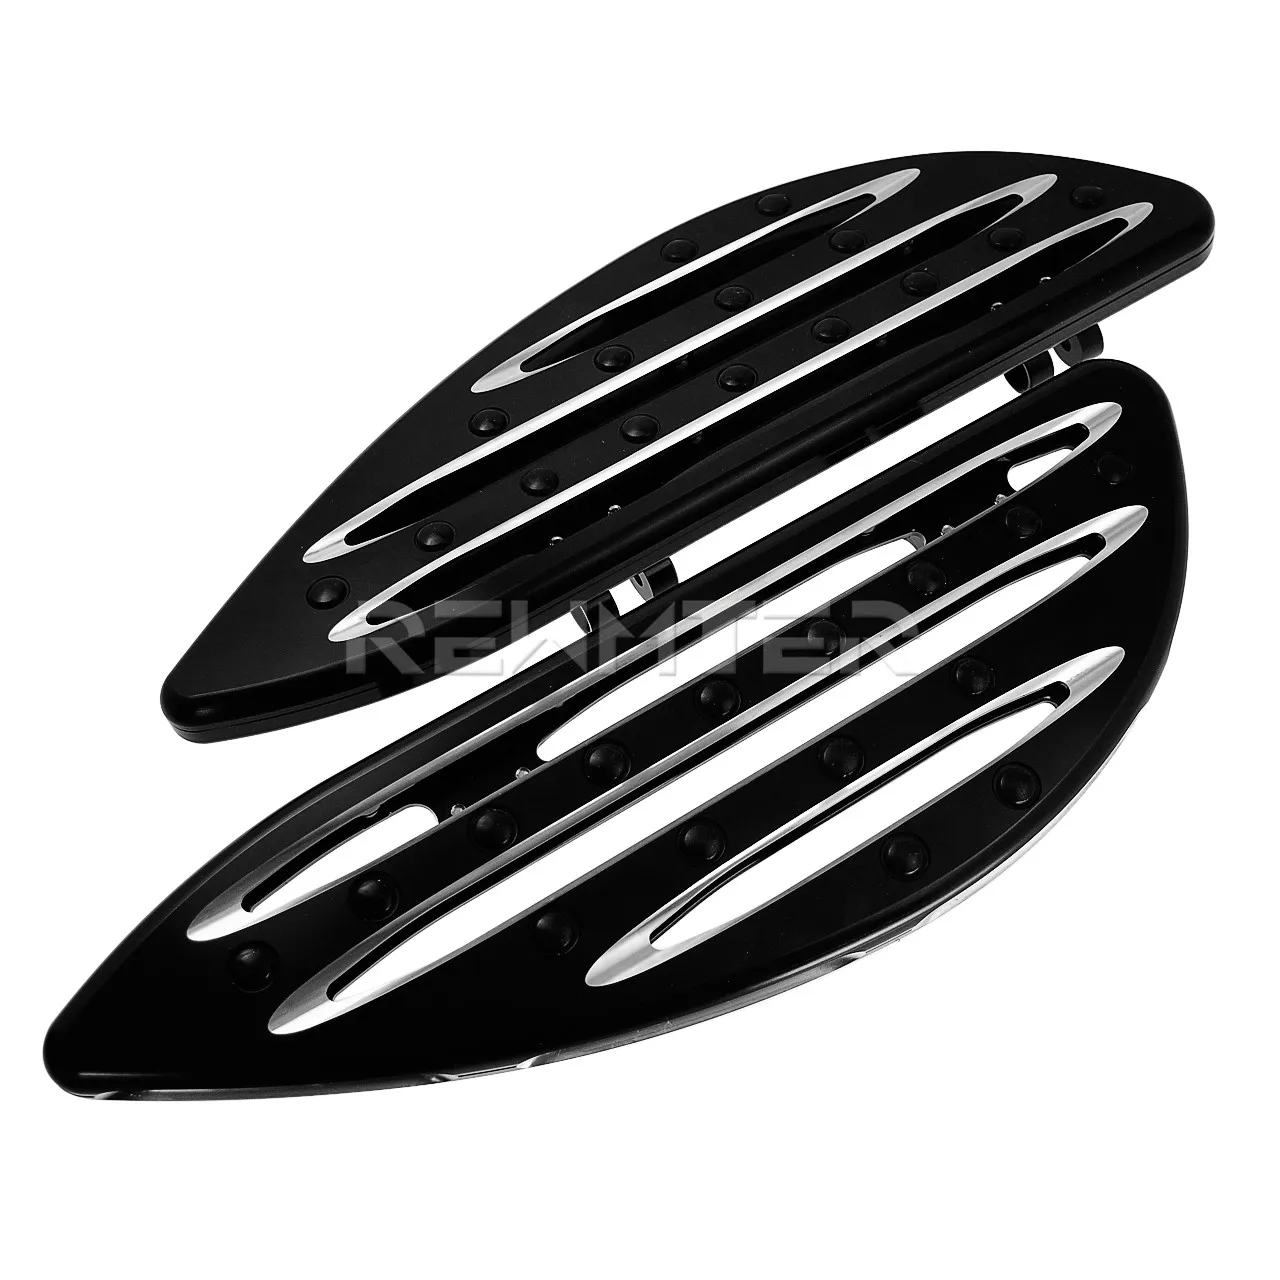 Привод ЧПУ Floorboard& пассажирский растянутый Footpeg Floorboard для Harley Touring Электра король дорог Улица Тур Glide